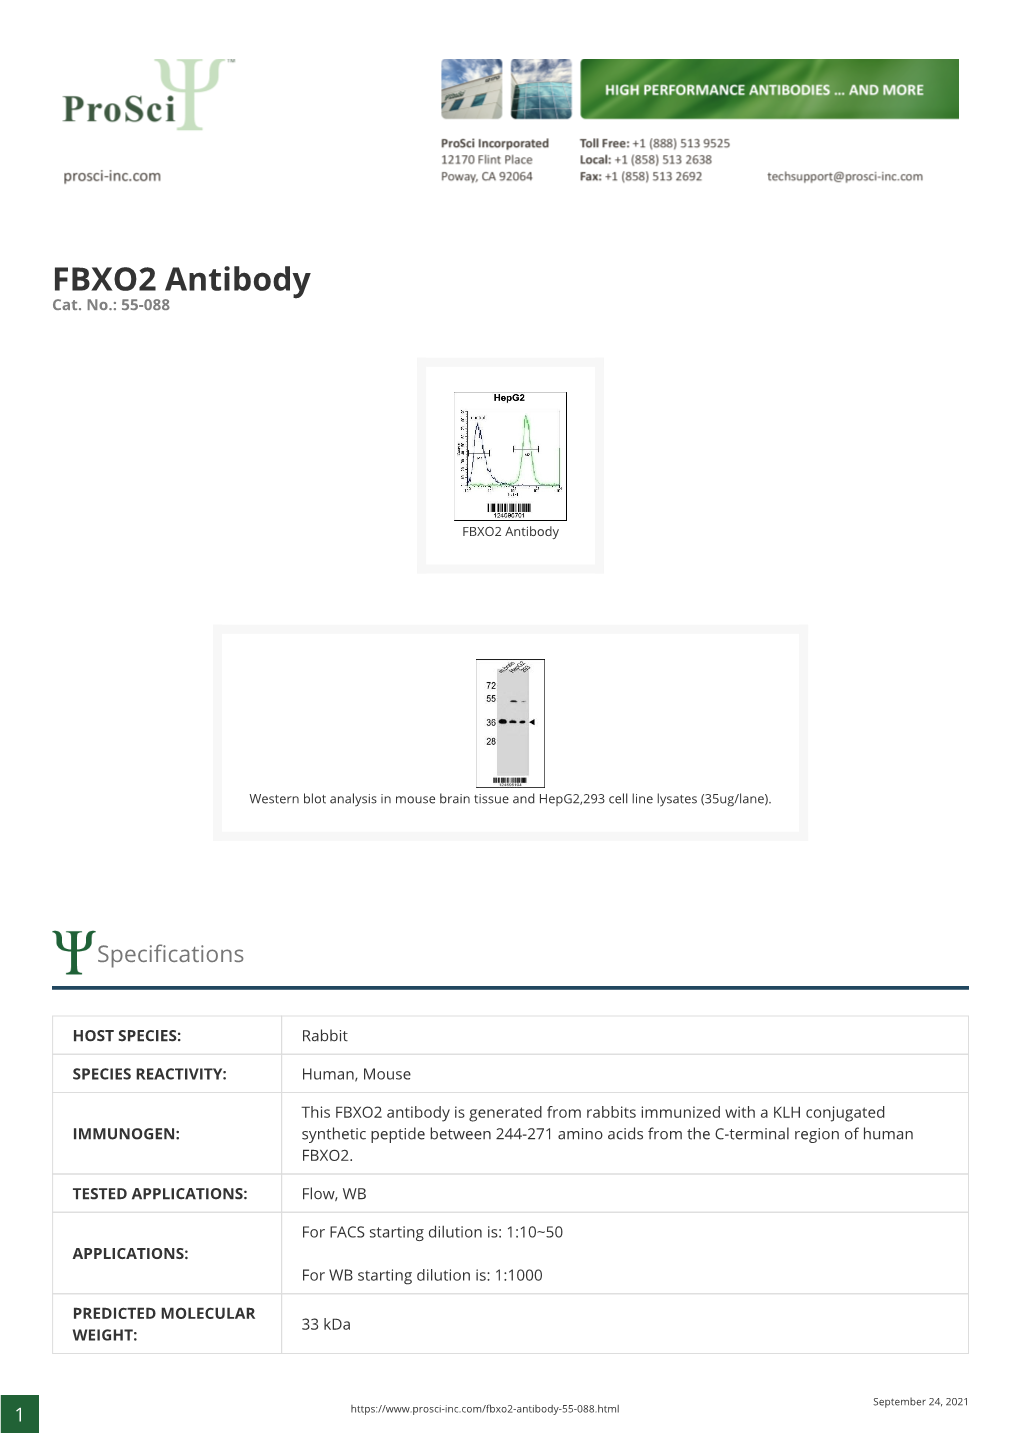 FBXO2 Antibody Cat